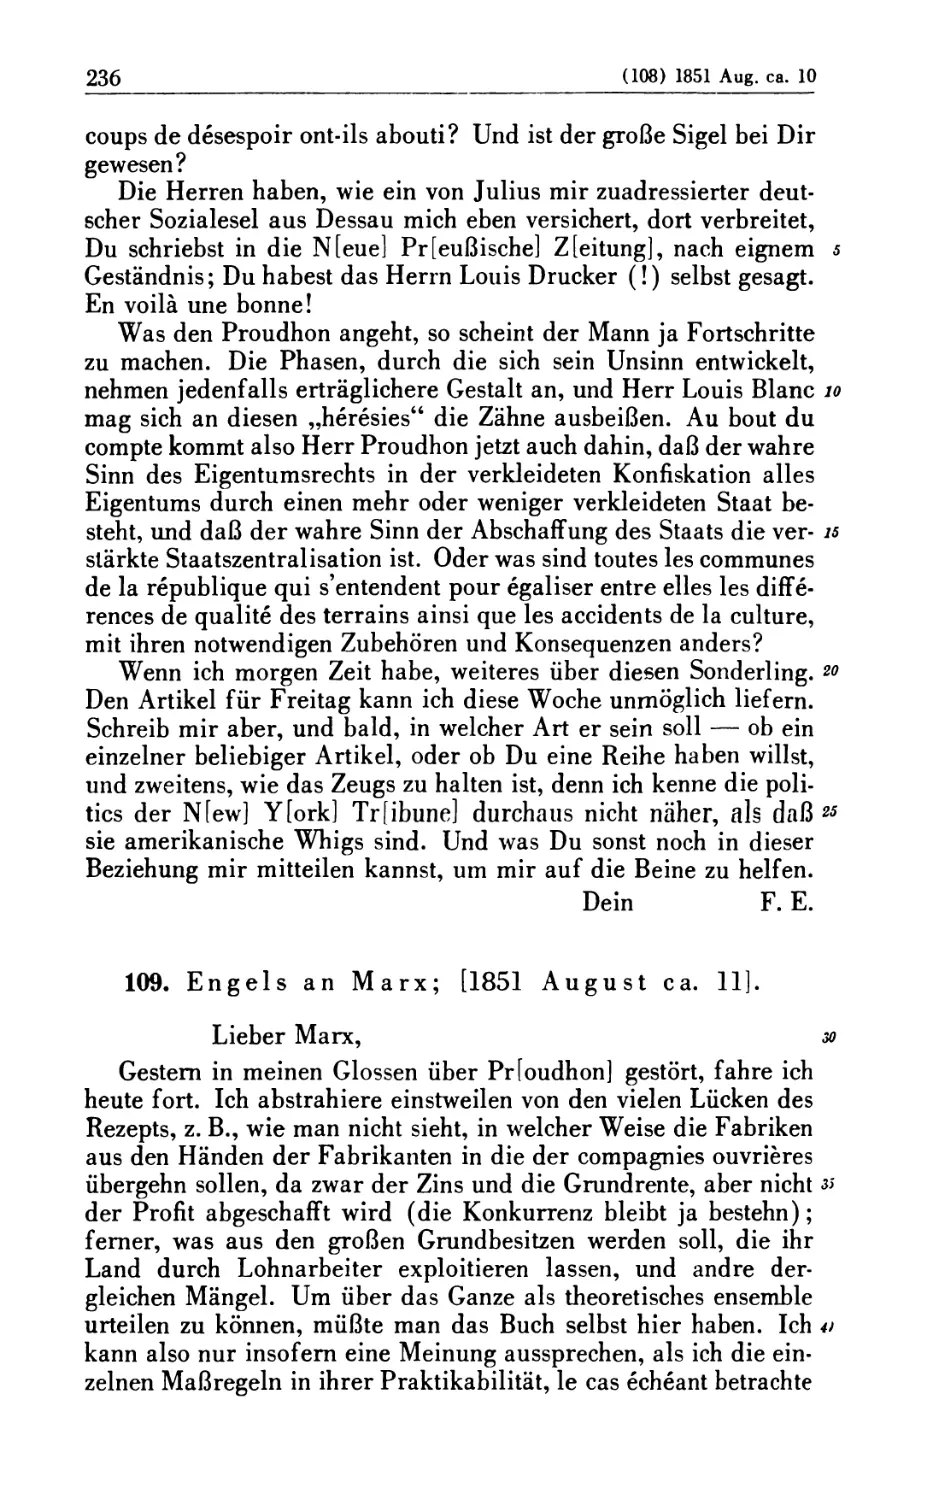 109. Engels an Marx; [1851 August ca. 11]